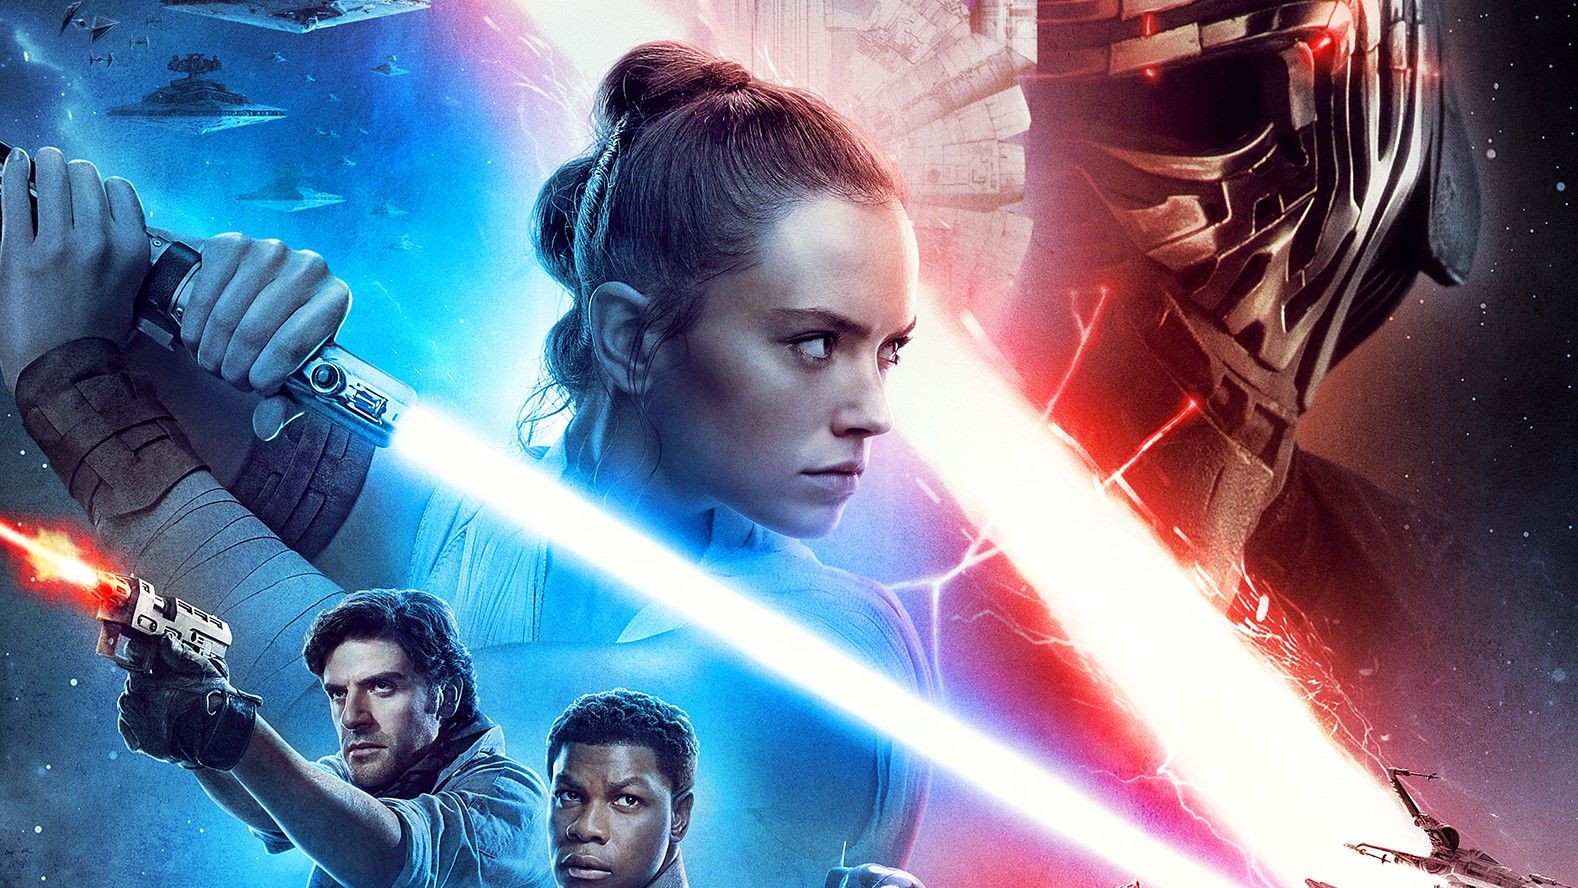 Star Wars: Episode IX - The Rise of Skywalker, Fanmade Films 4 Wiki